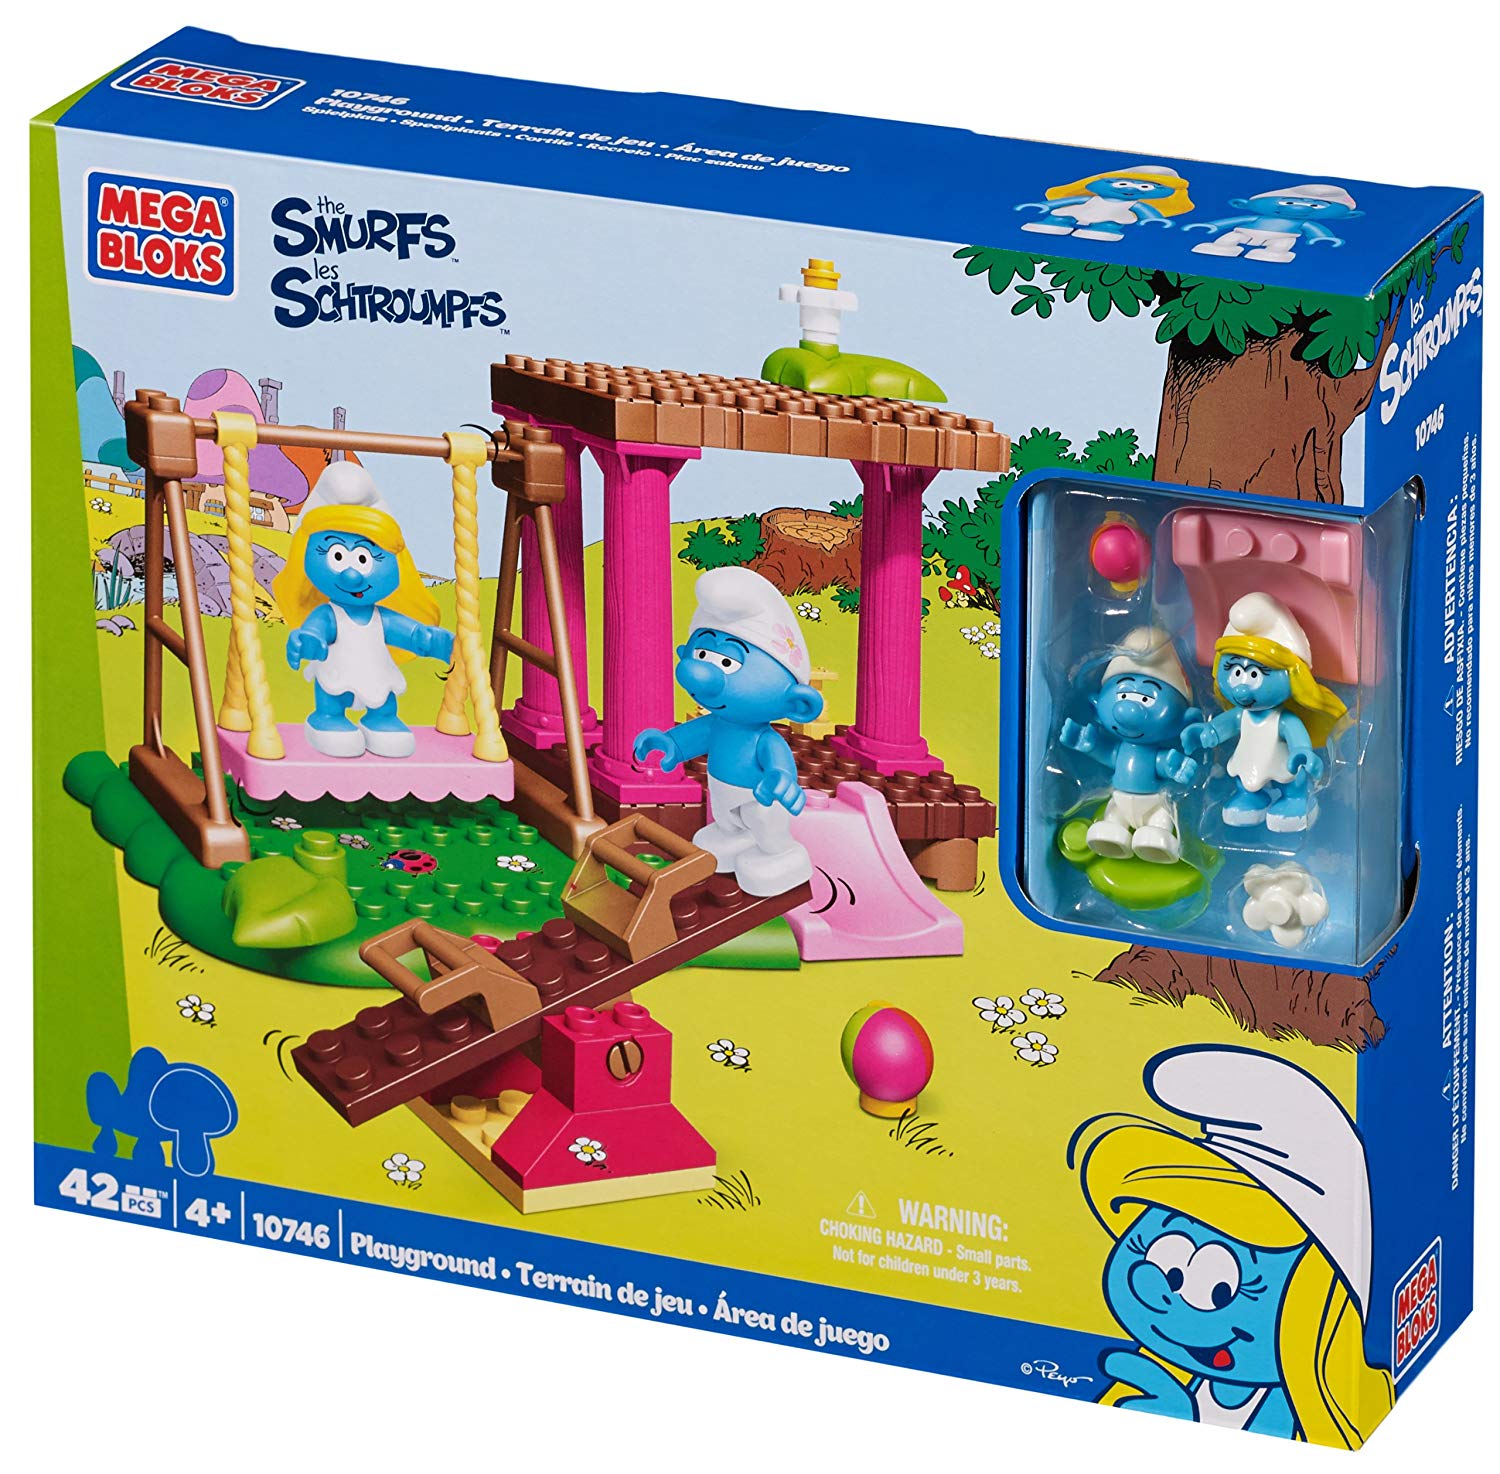 Mega Bloks Smurfs Playground Building Playset